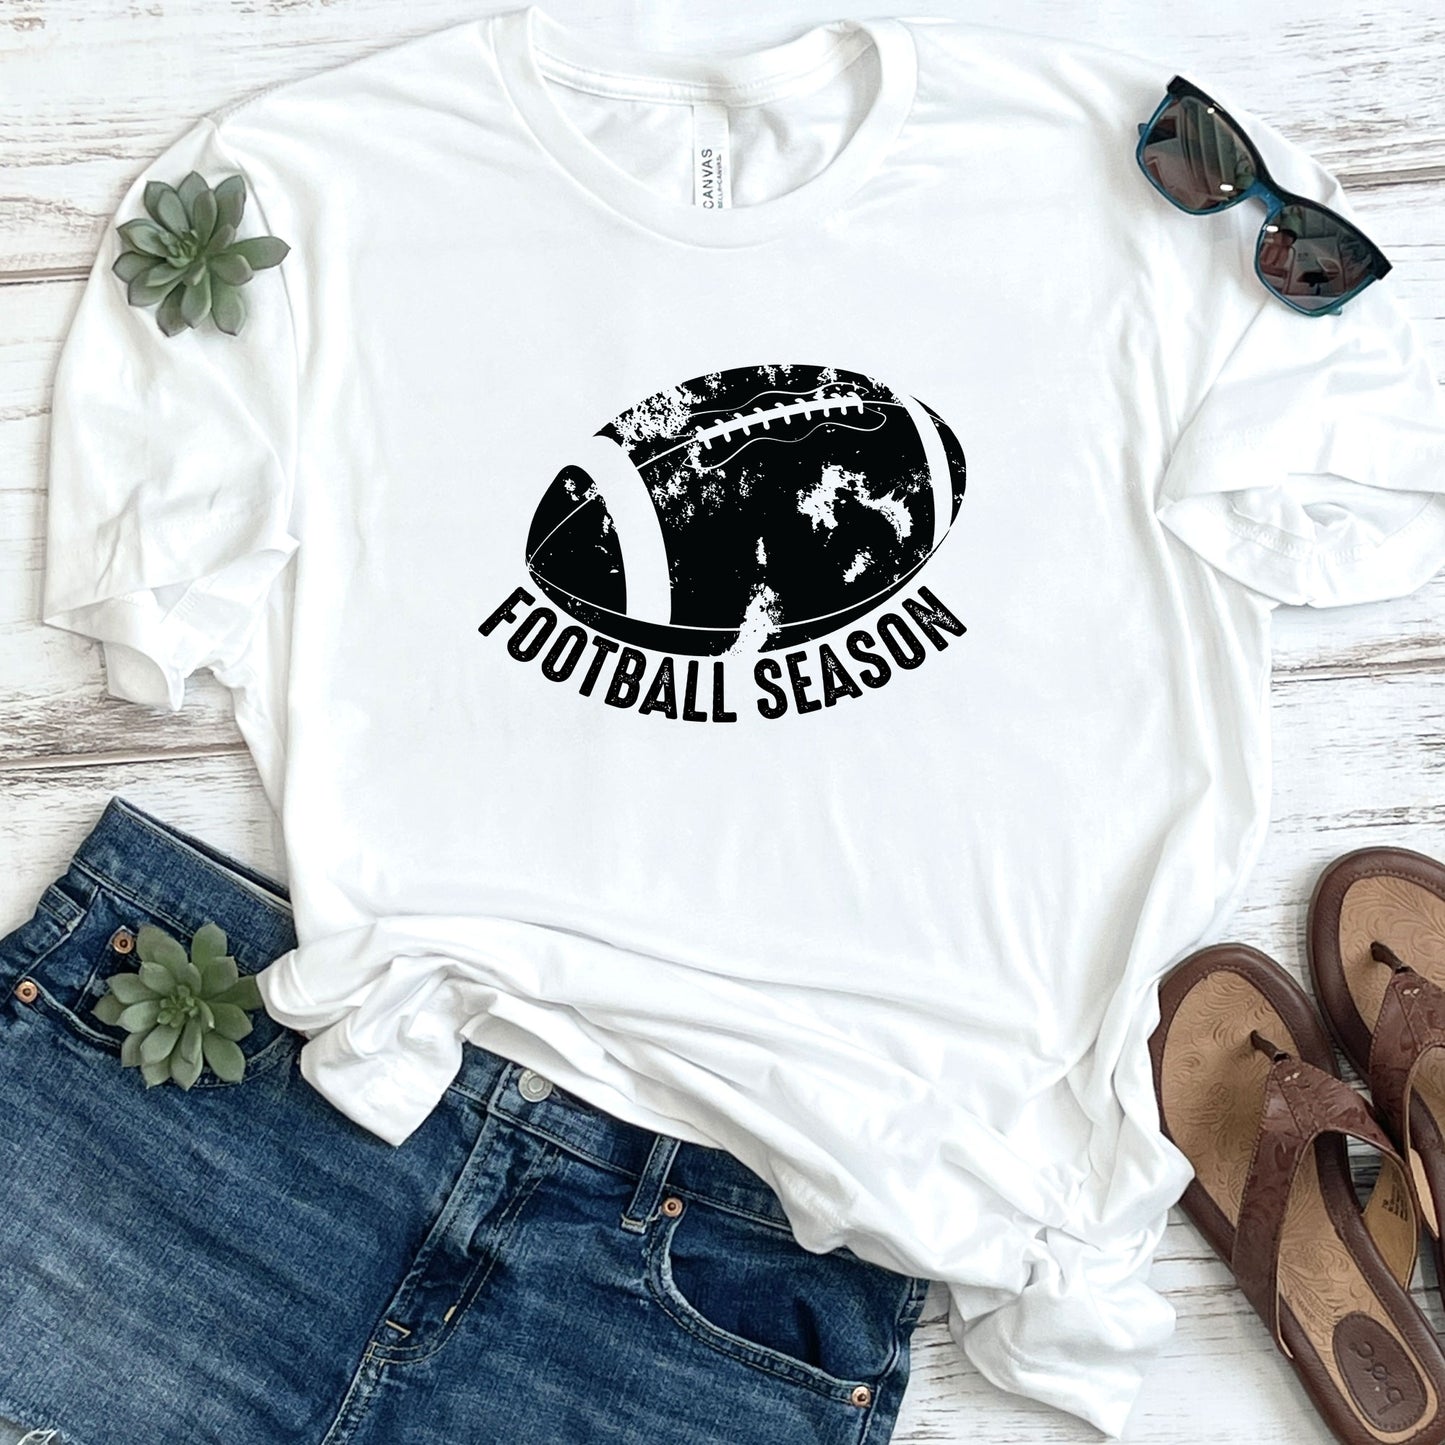 Football Season DTF